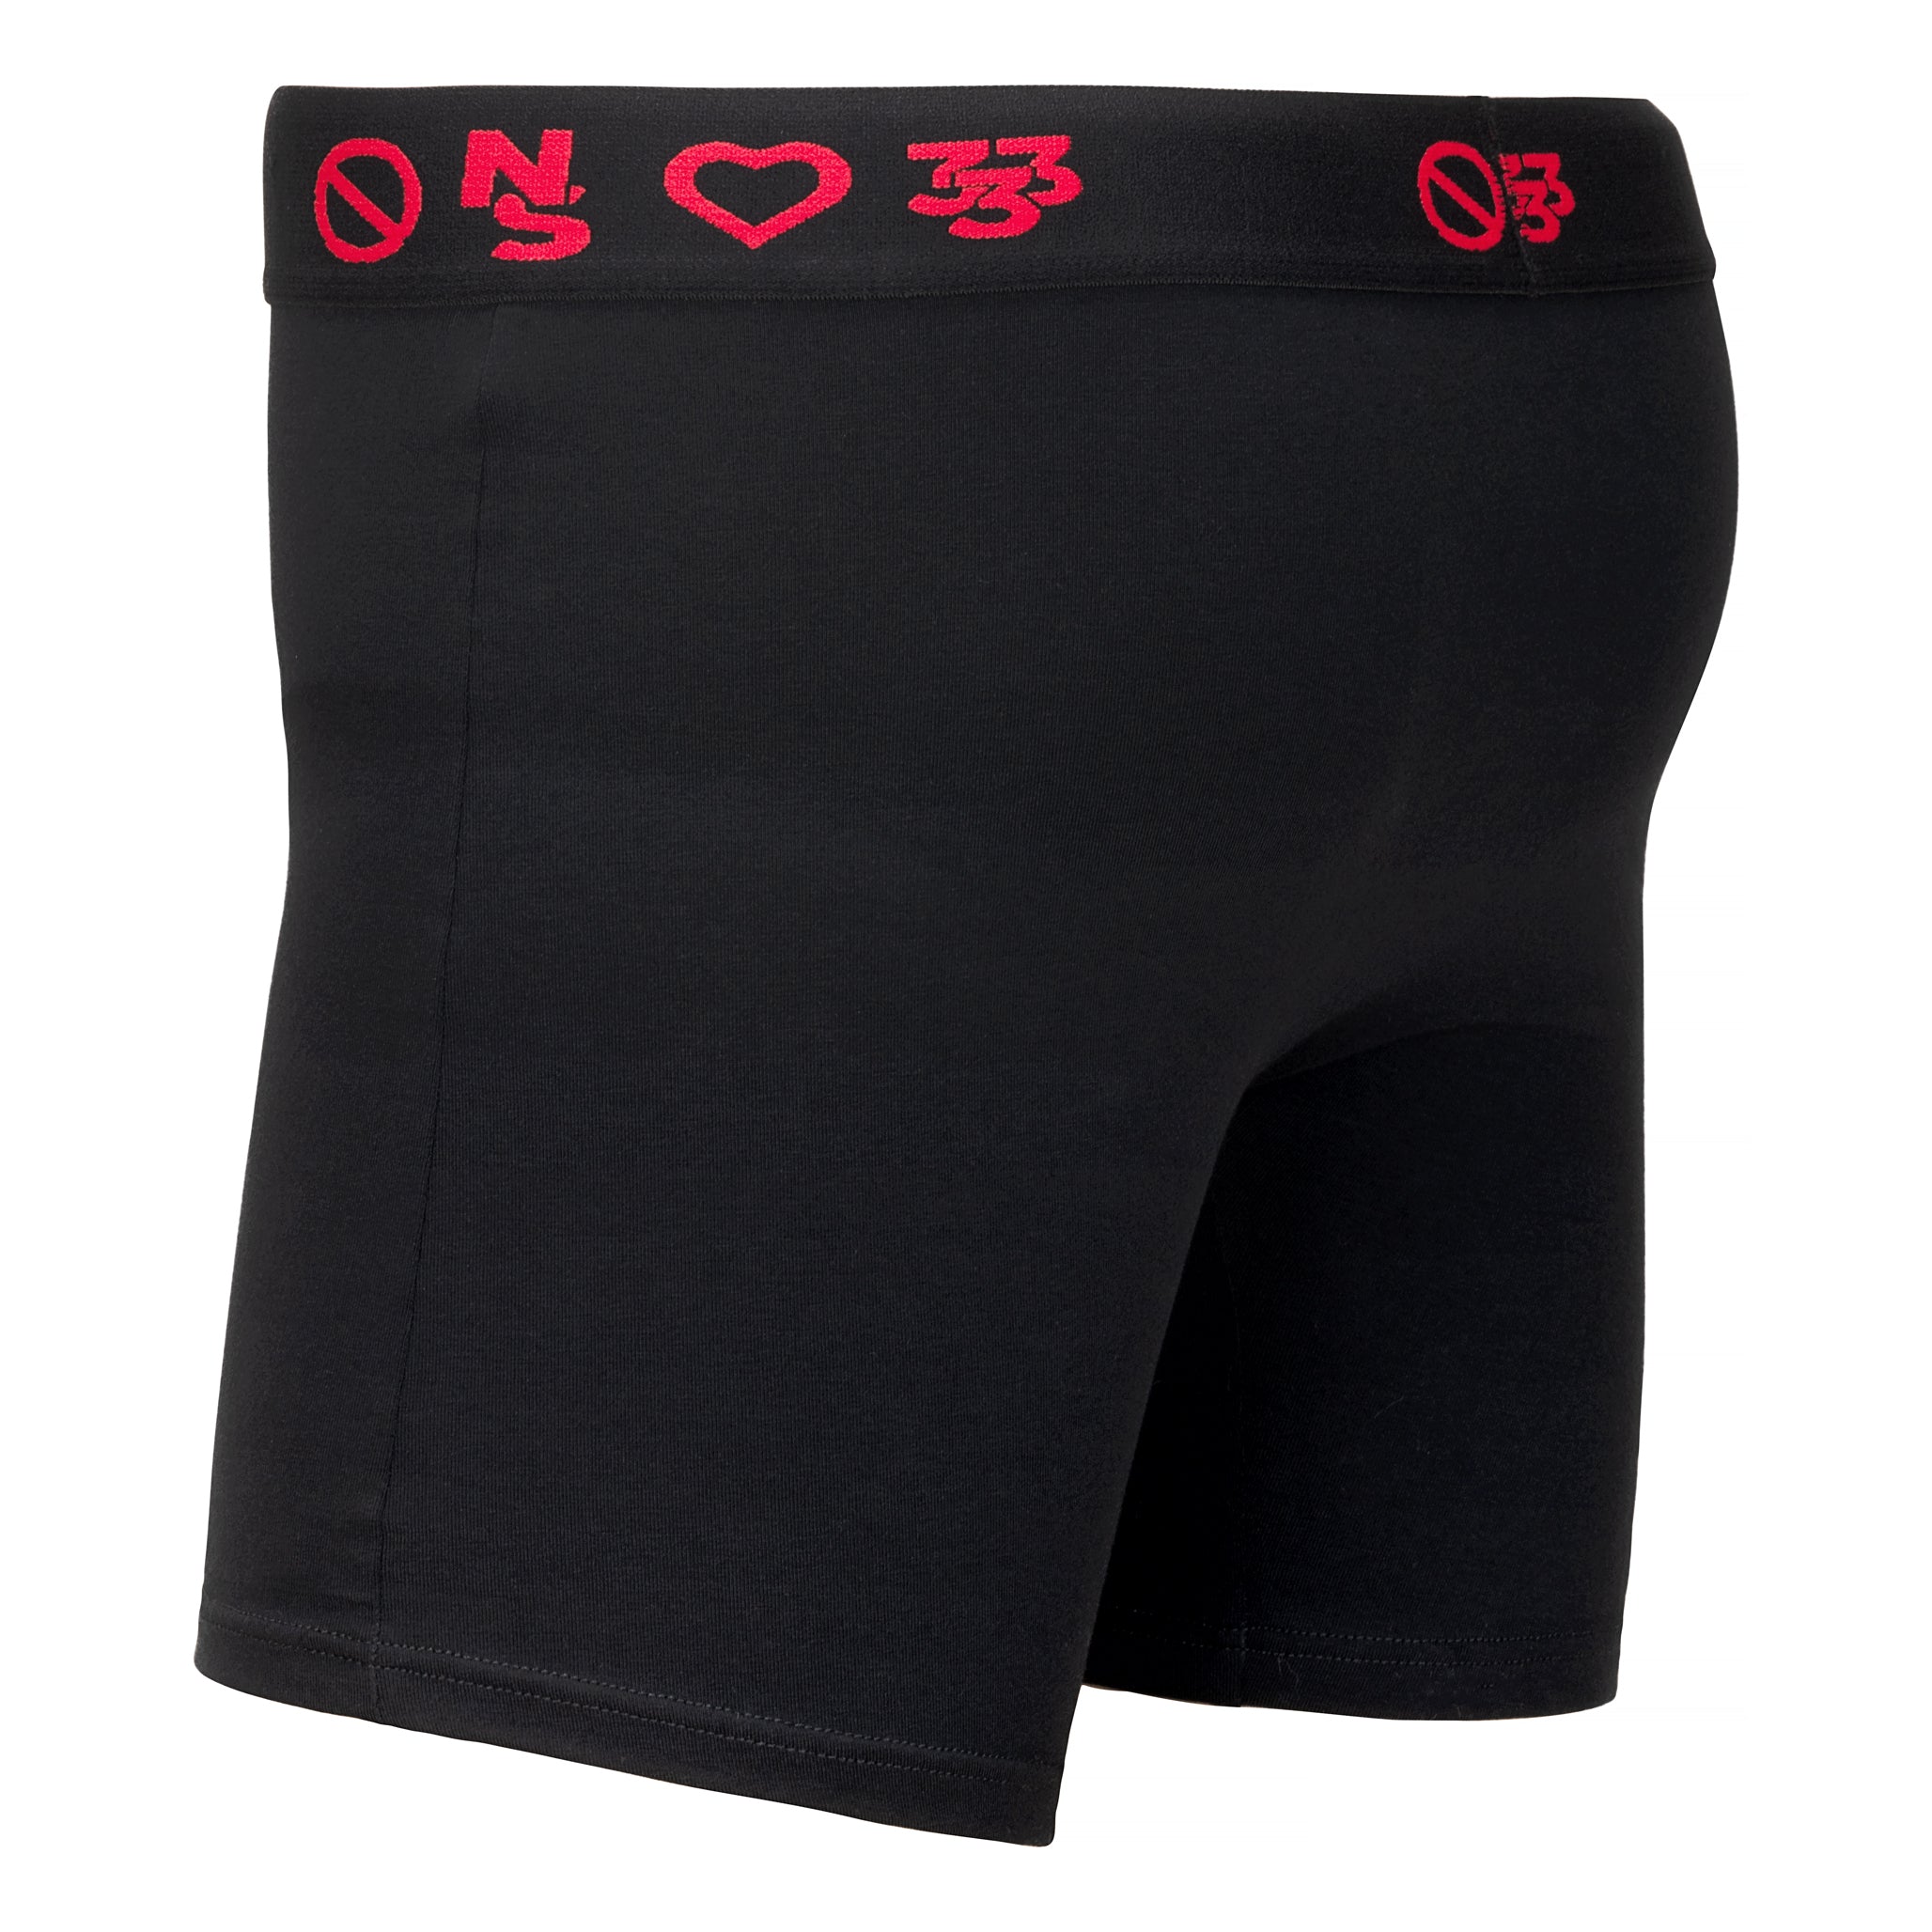 Logo Boxer Shorts - 2x pack - No Stress Wear